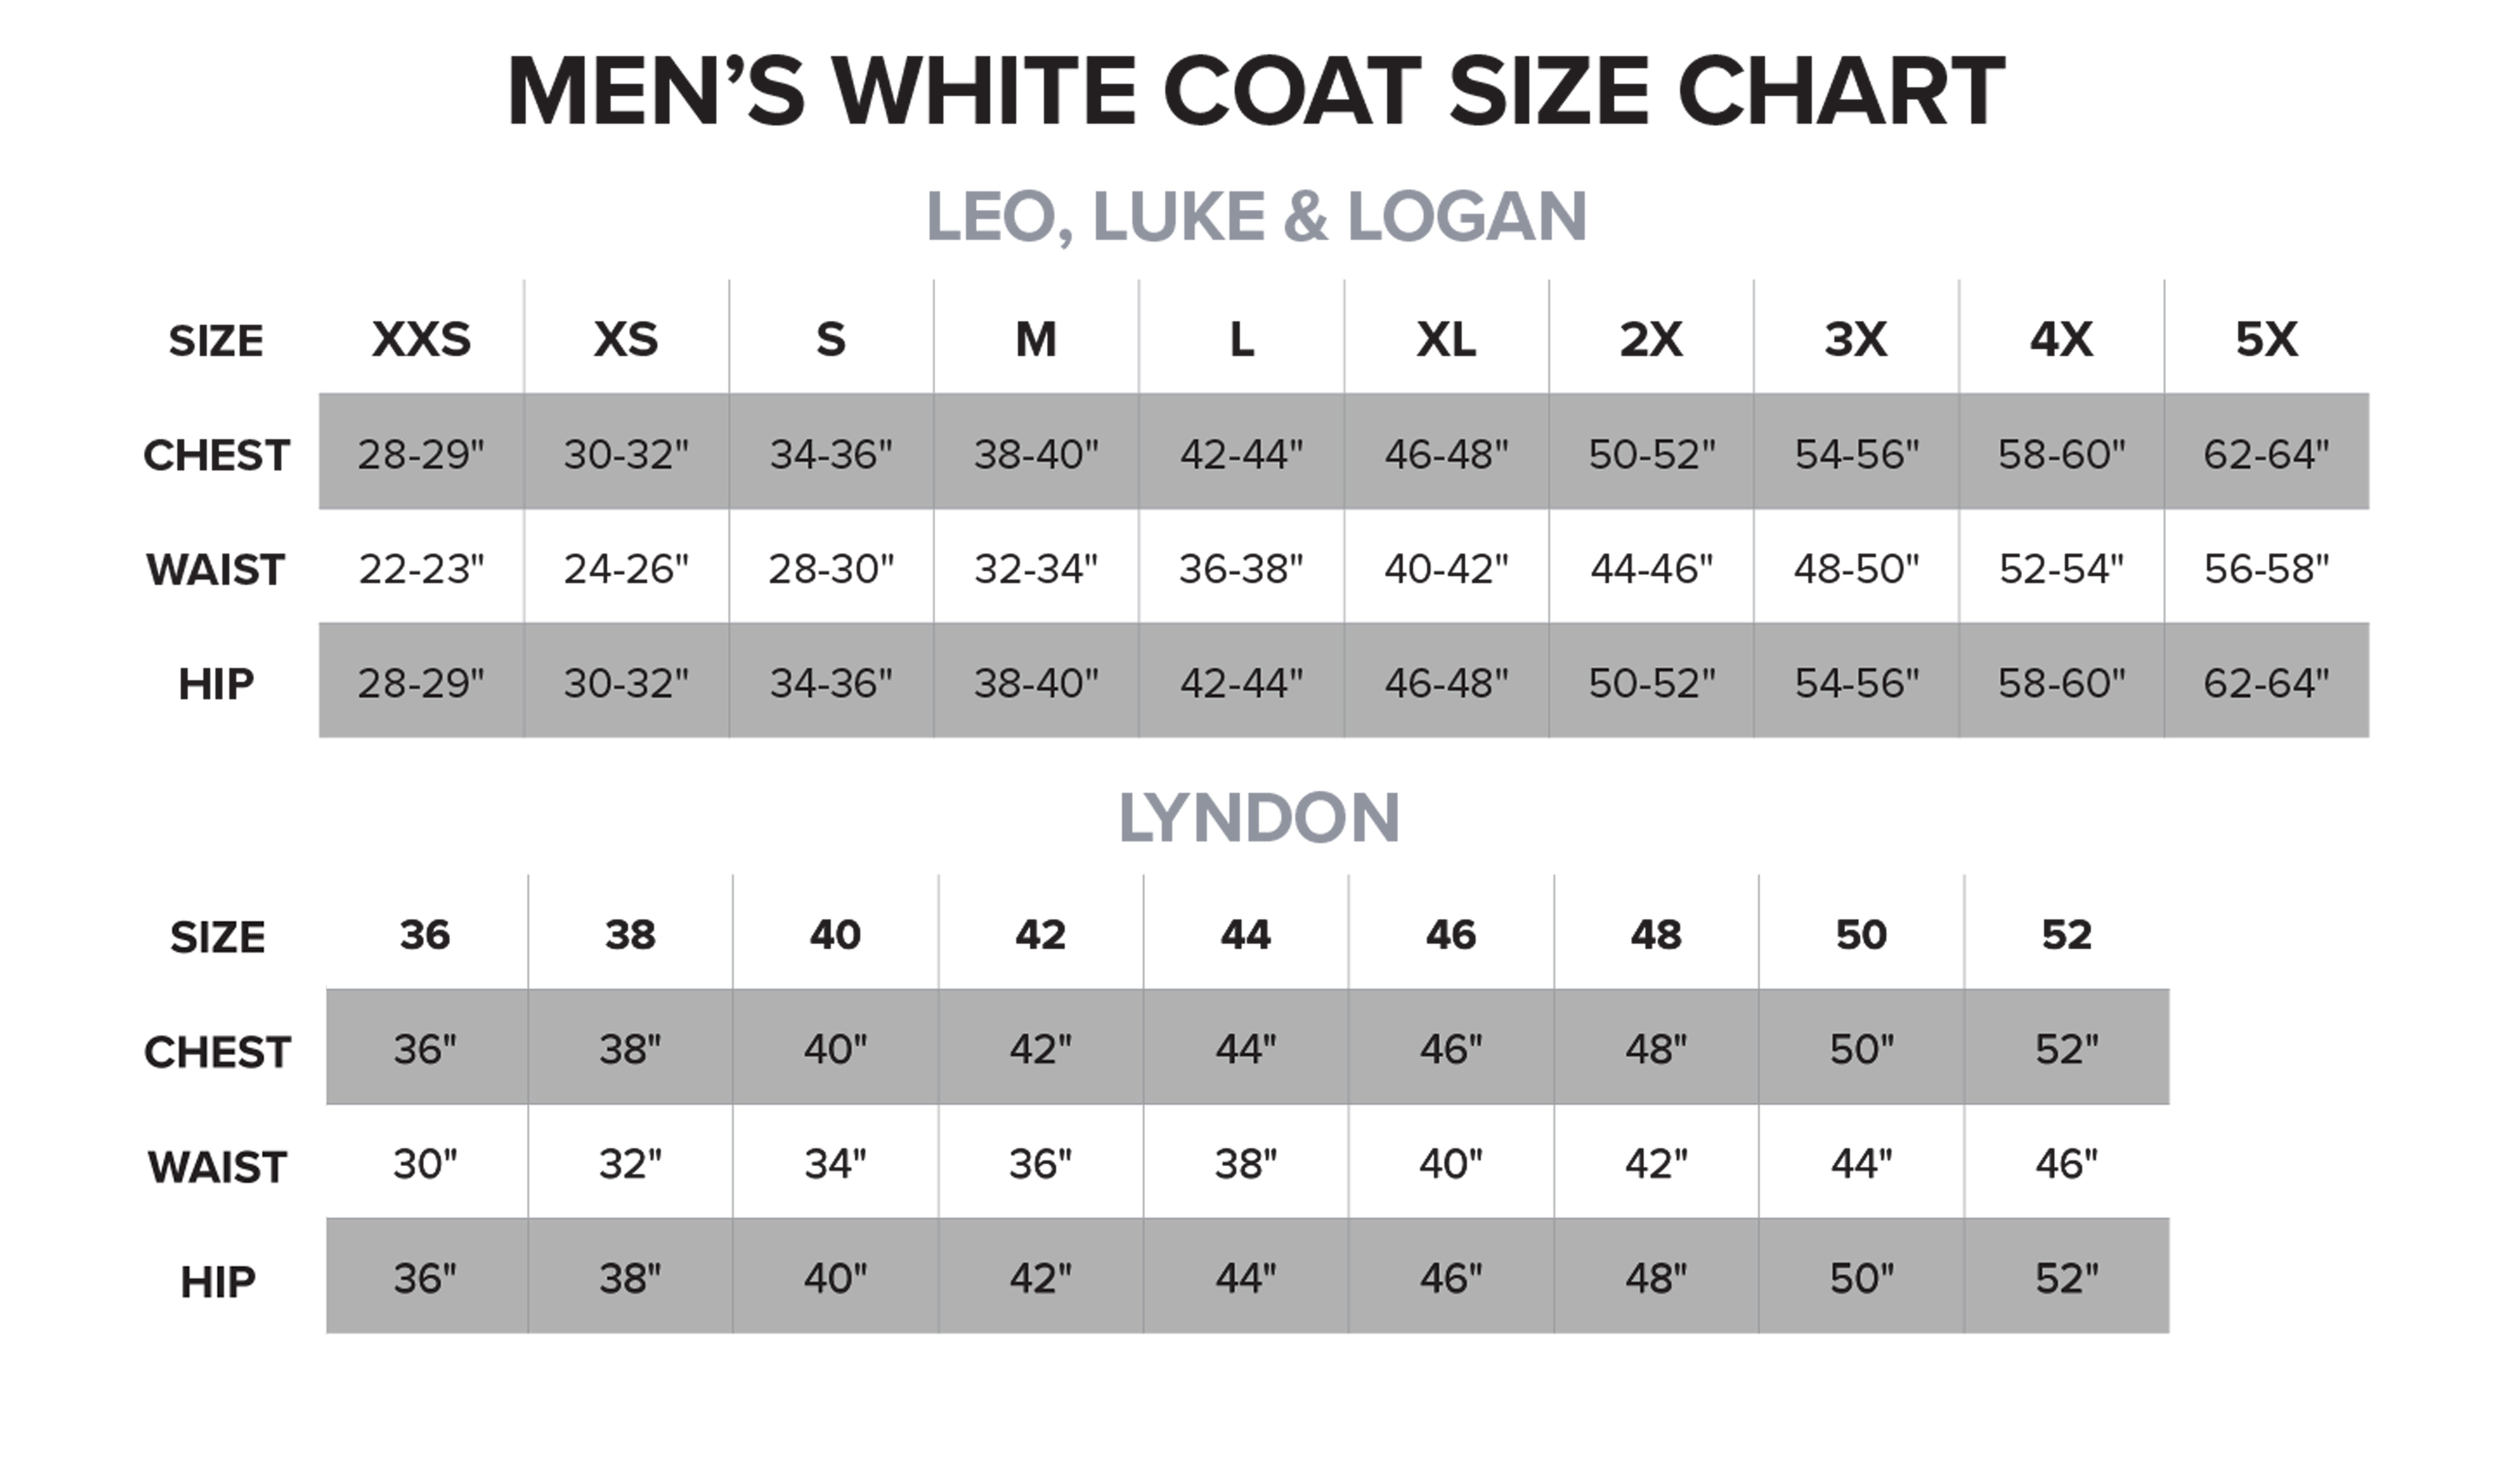 The White Coat Size Chart for Men